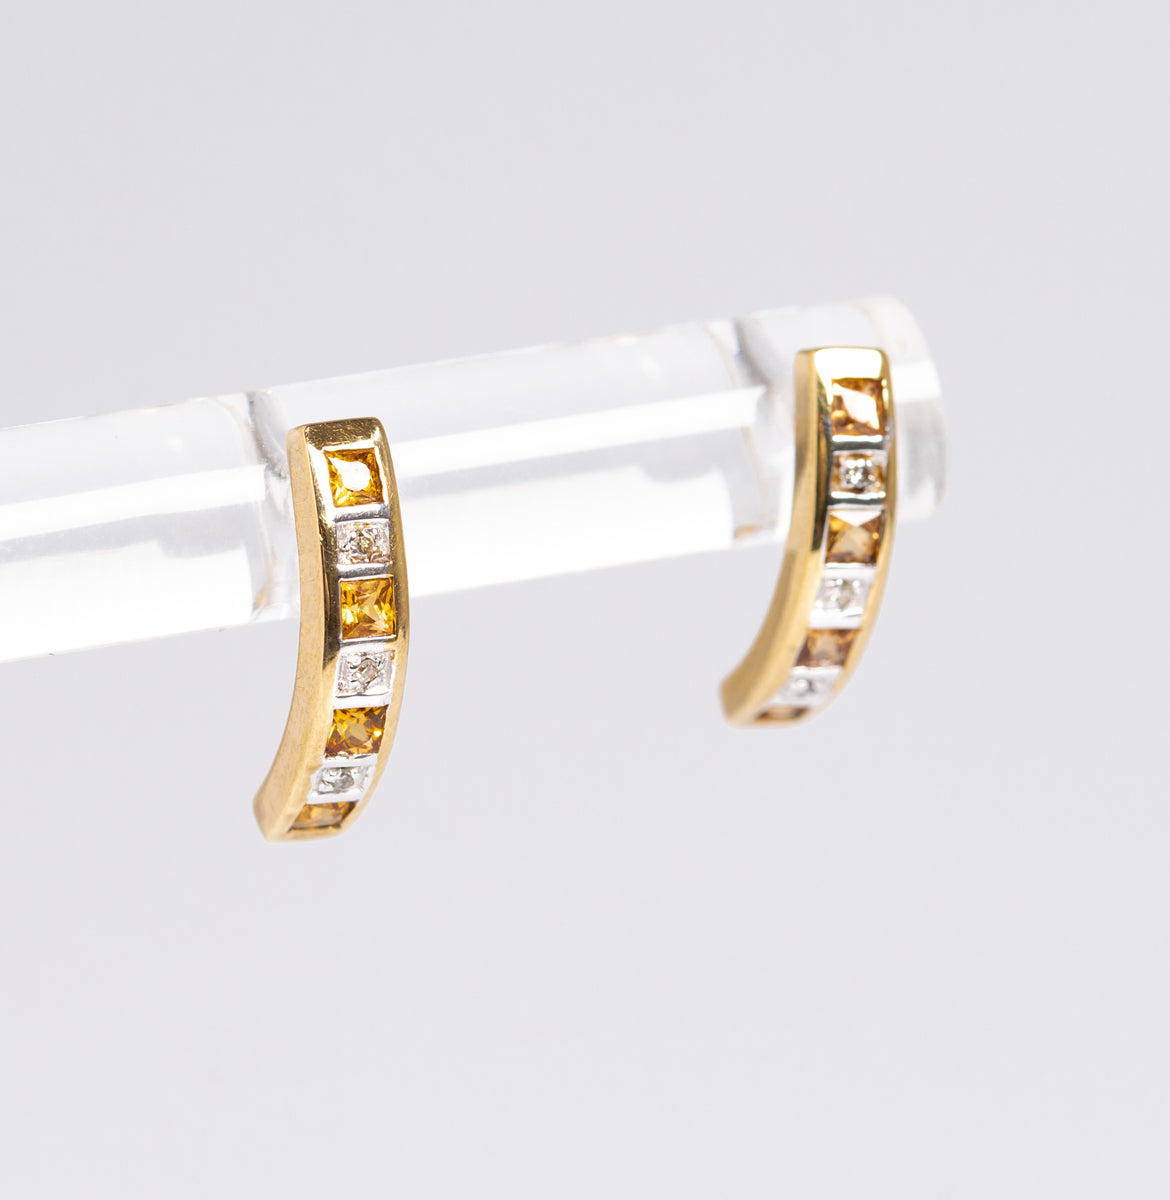 Citrine & Diamond Gemstone Pair Earrings In 9ct Gold Arc Shape Hallmarked 2006 (A1388)